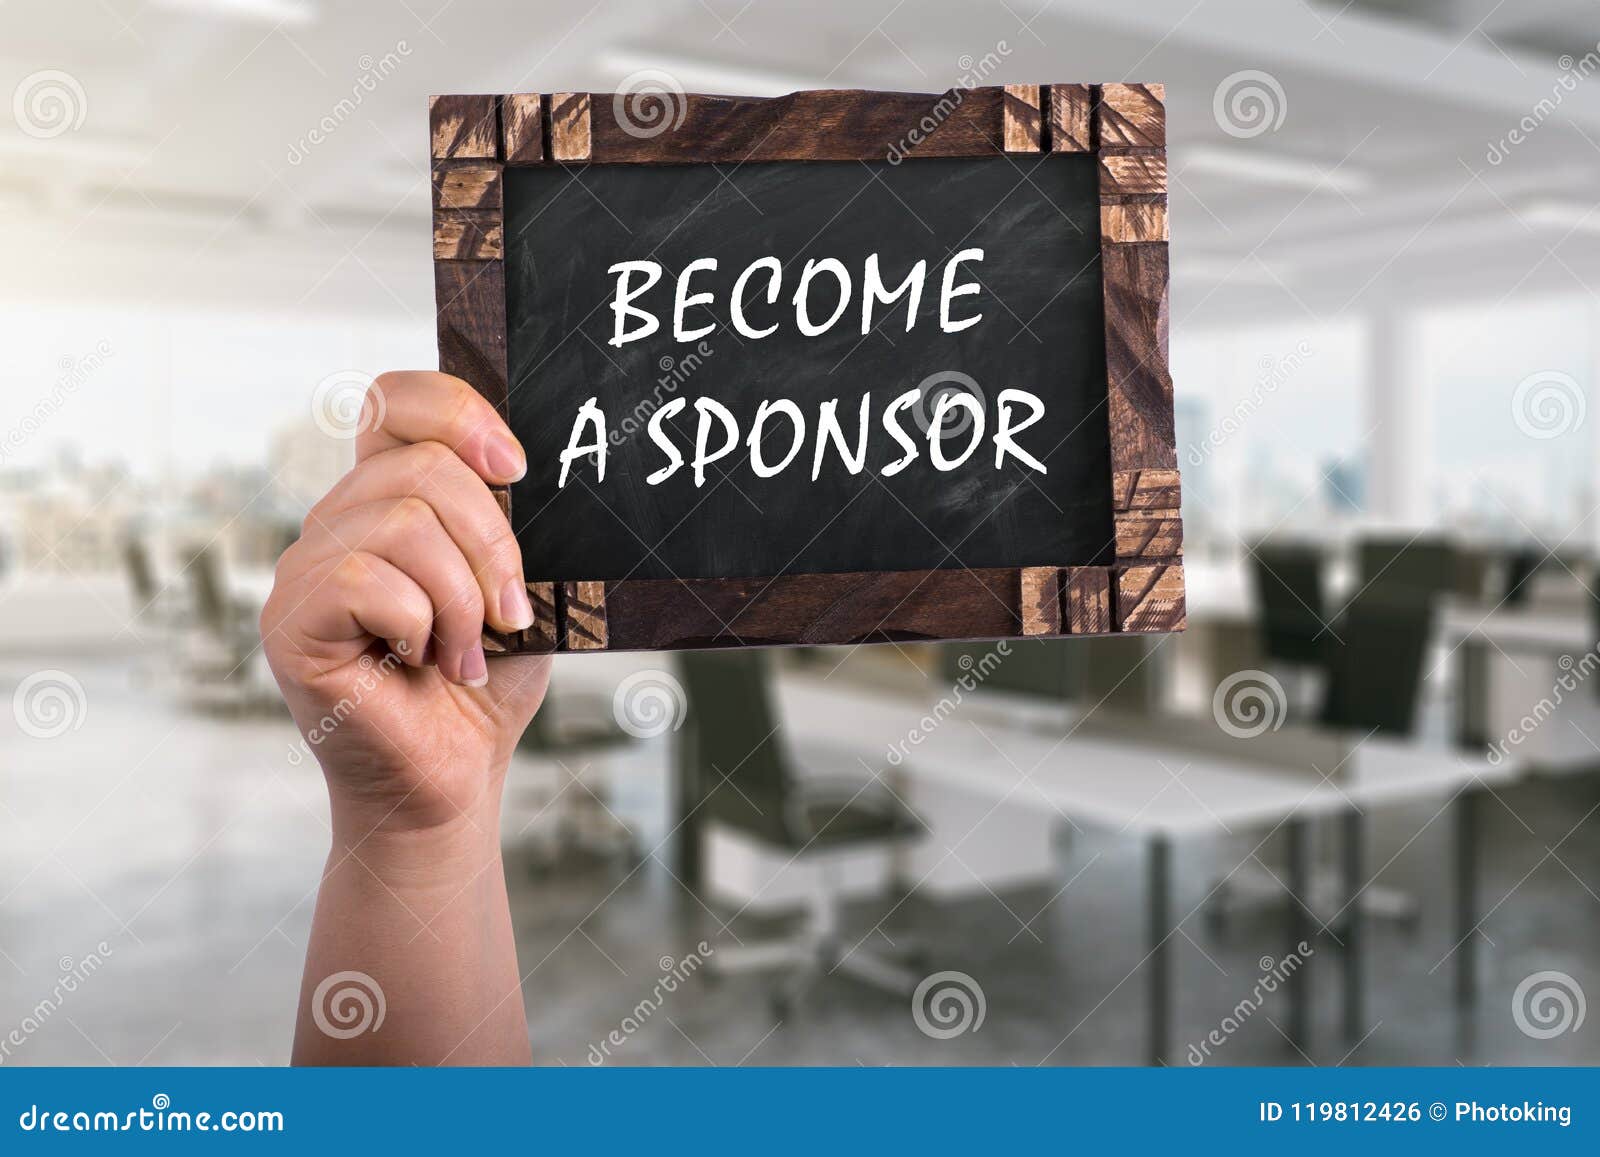 become a sponsor on chalkboard